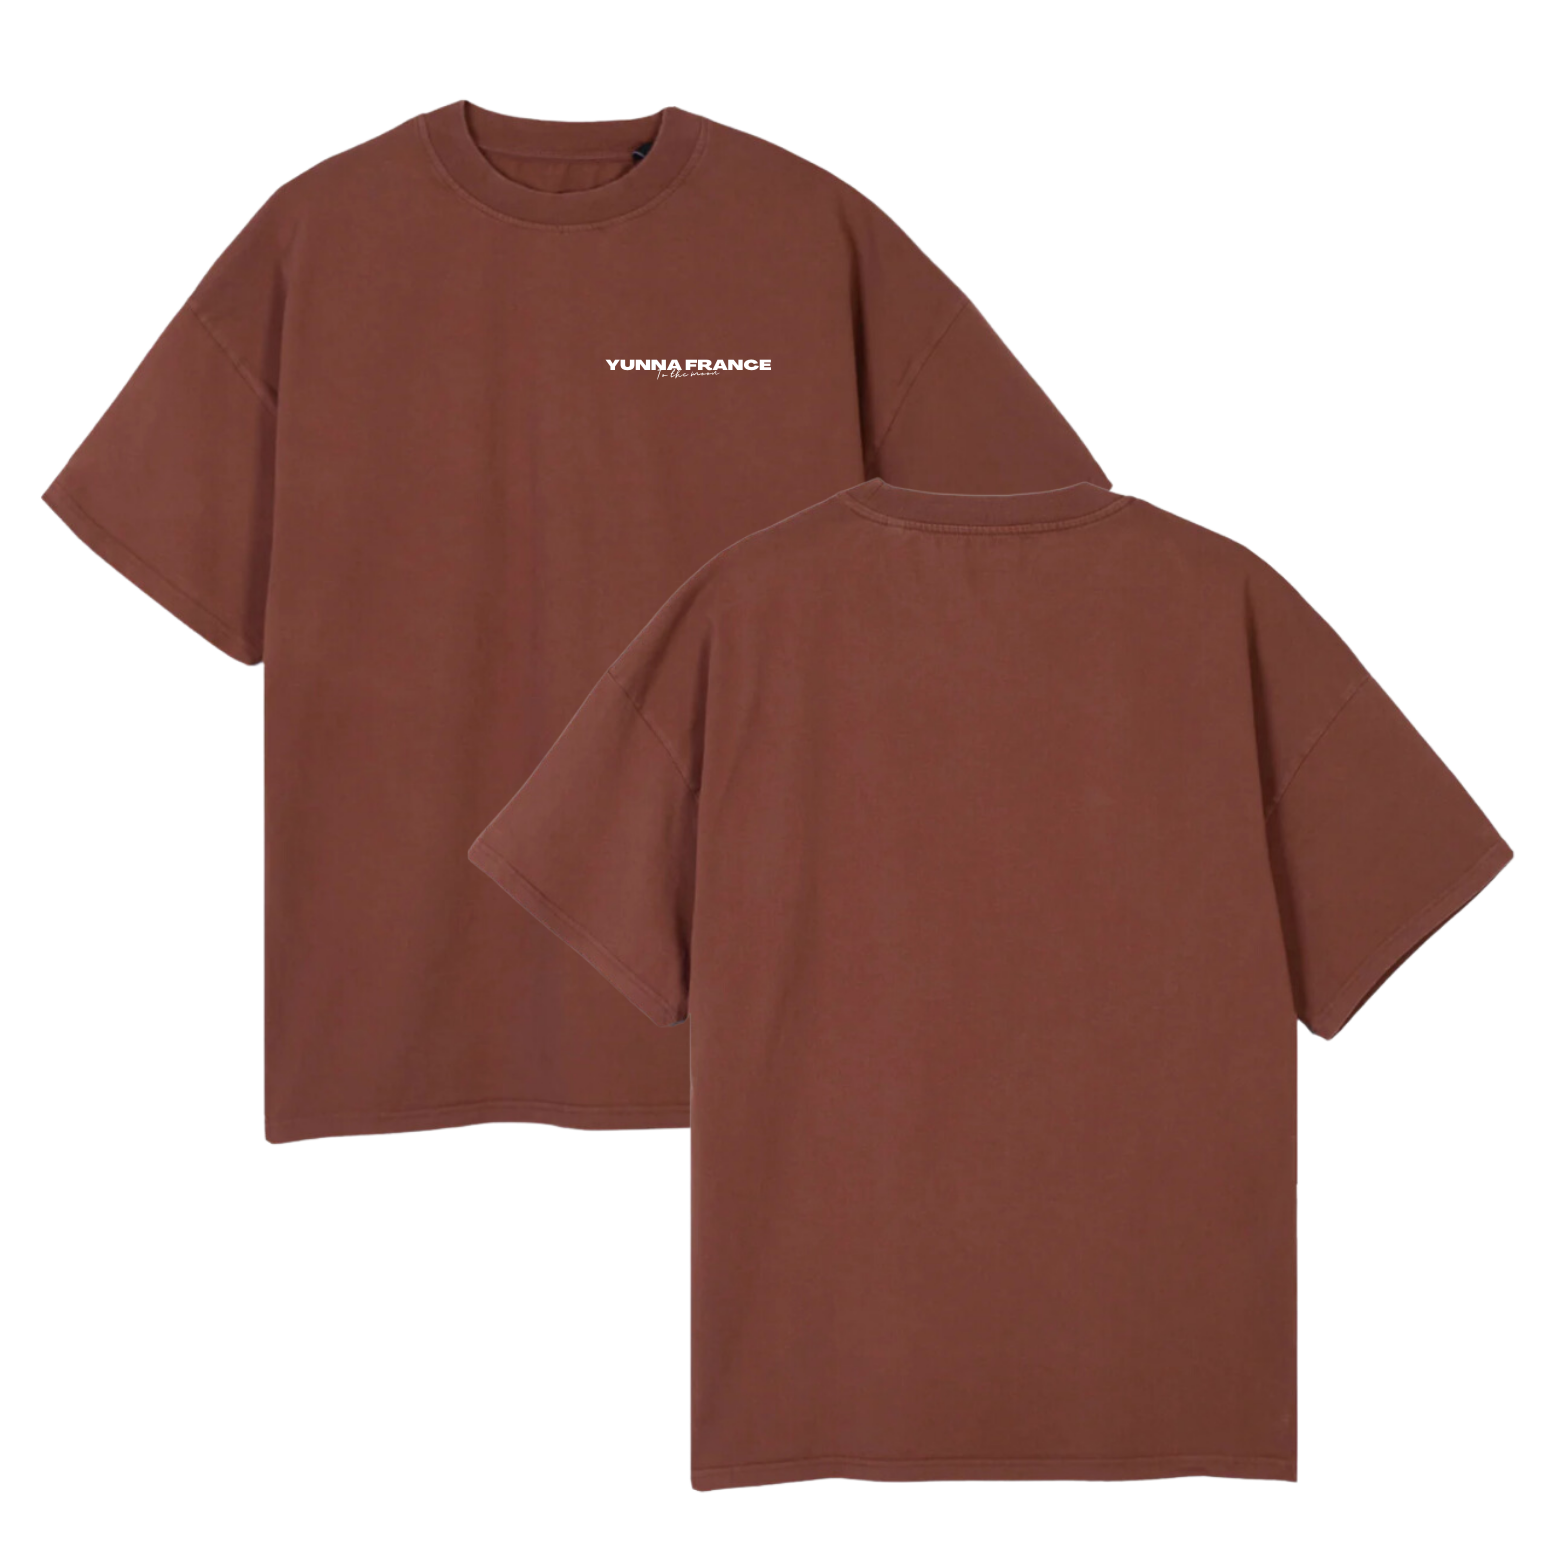 T-shirt Oversize Marron - Personnalisation - Yunna France